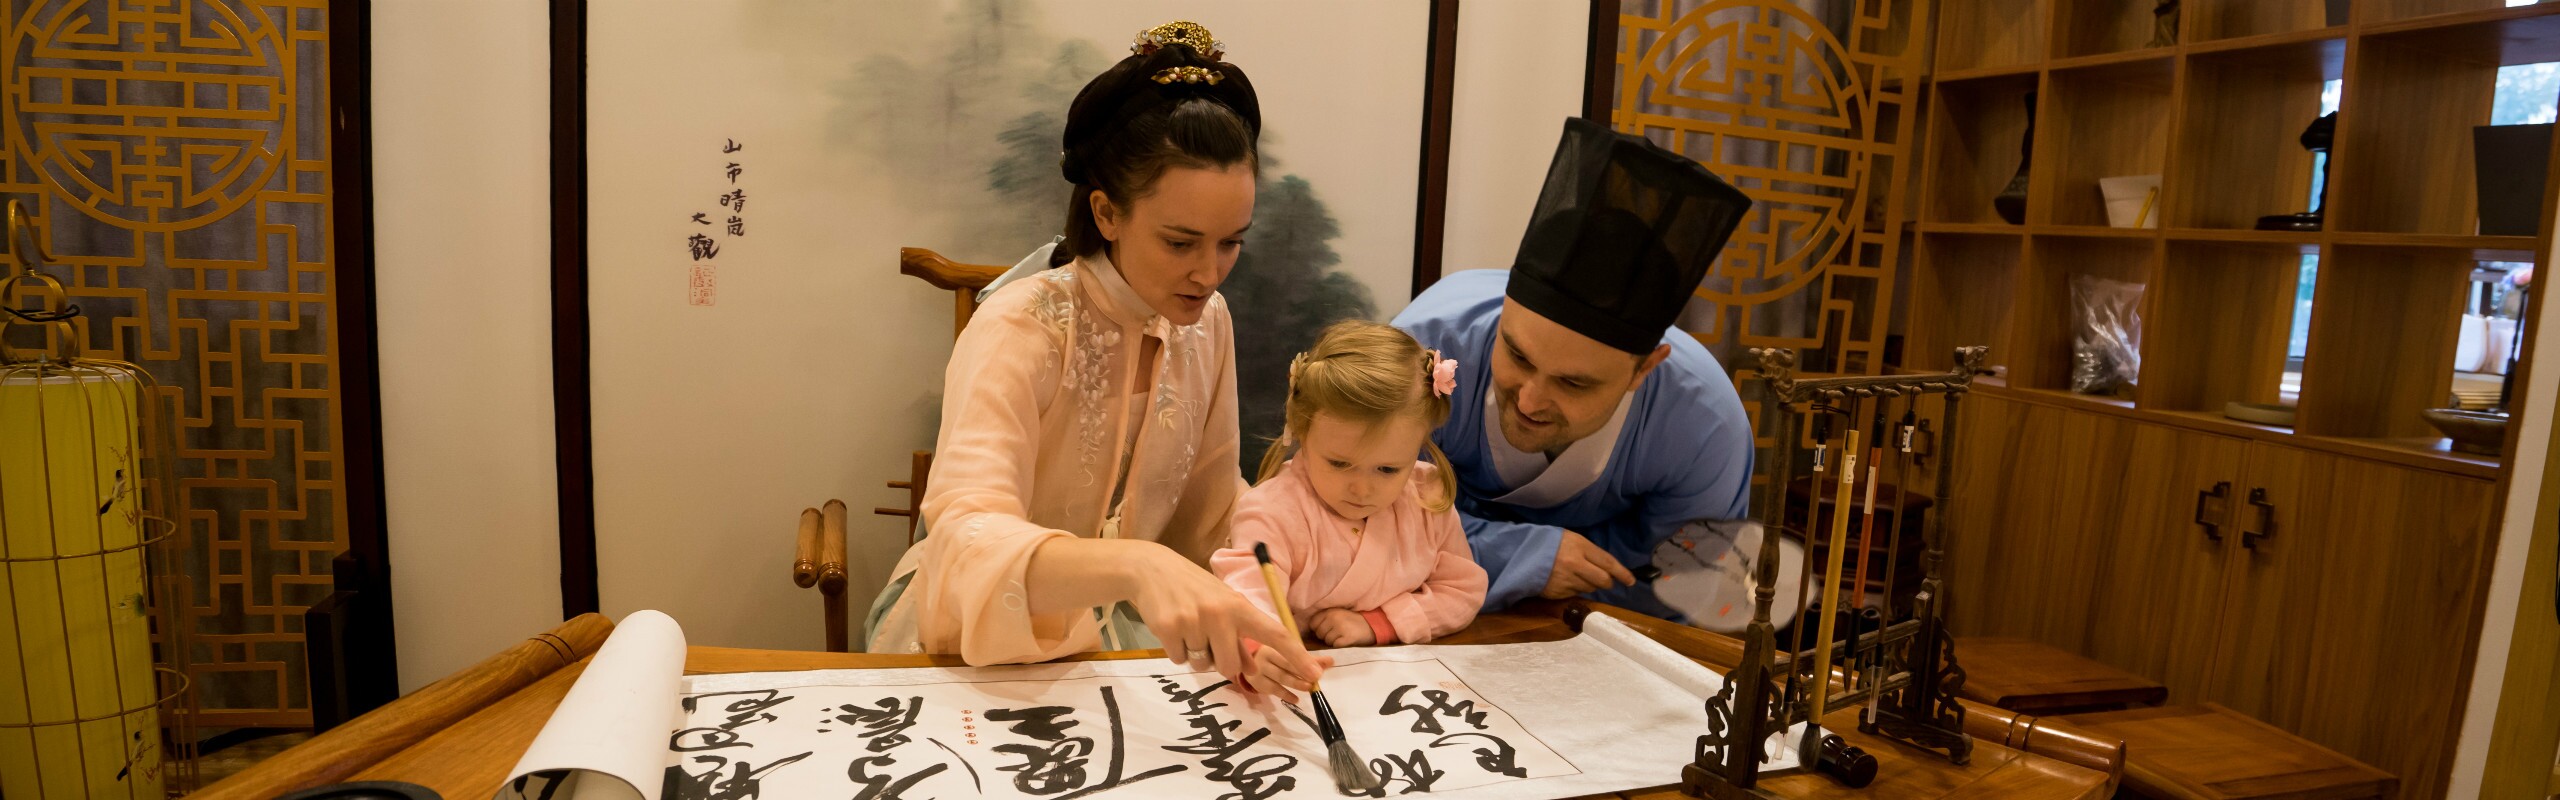 Spotlight Experiences for China Family Tours